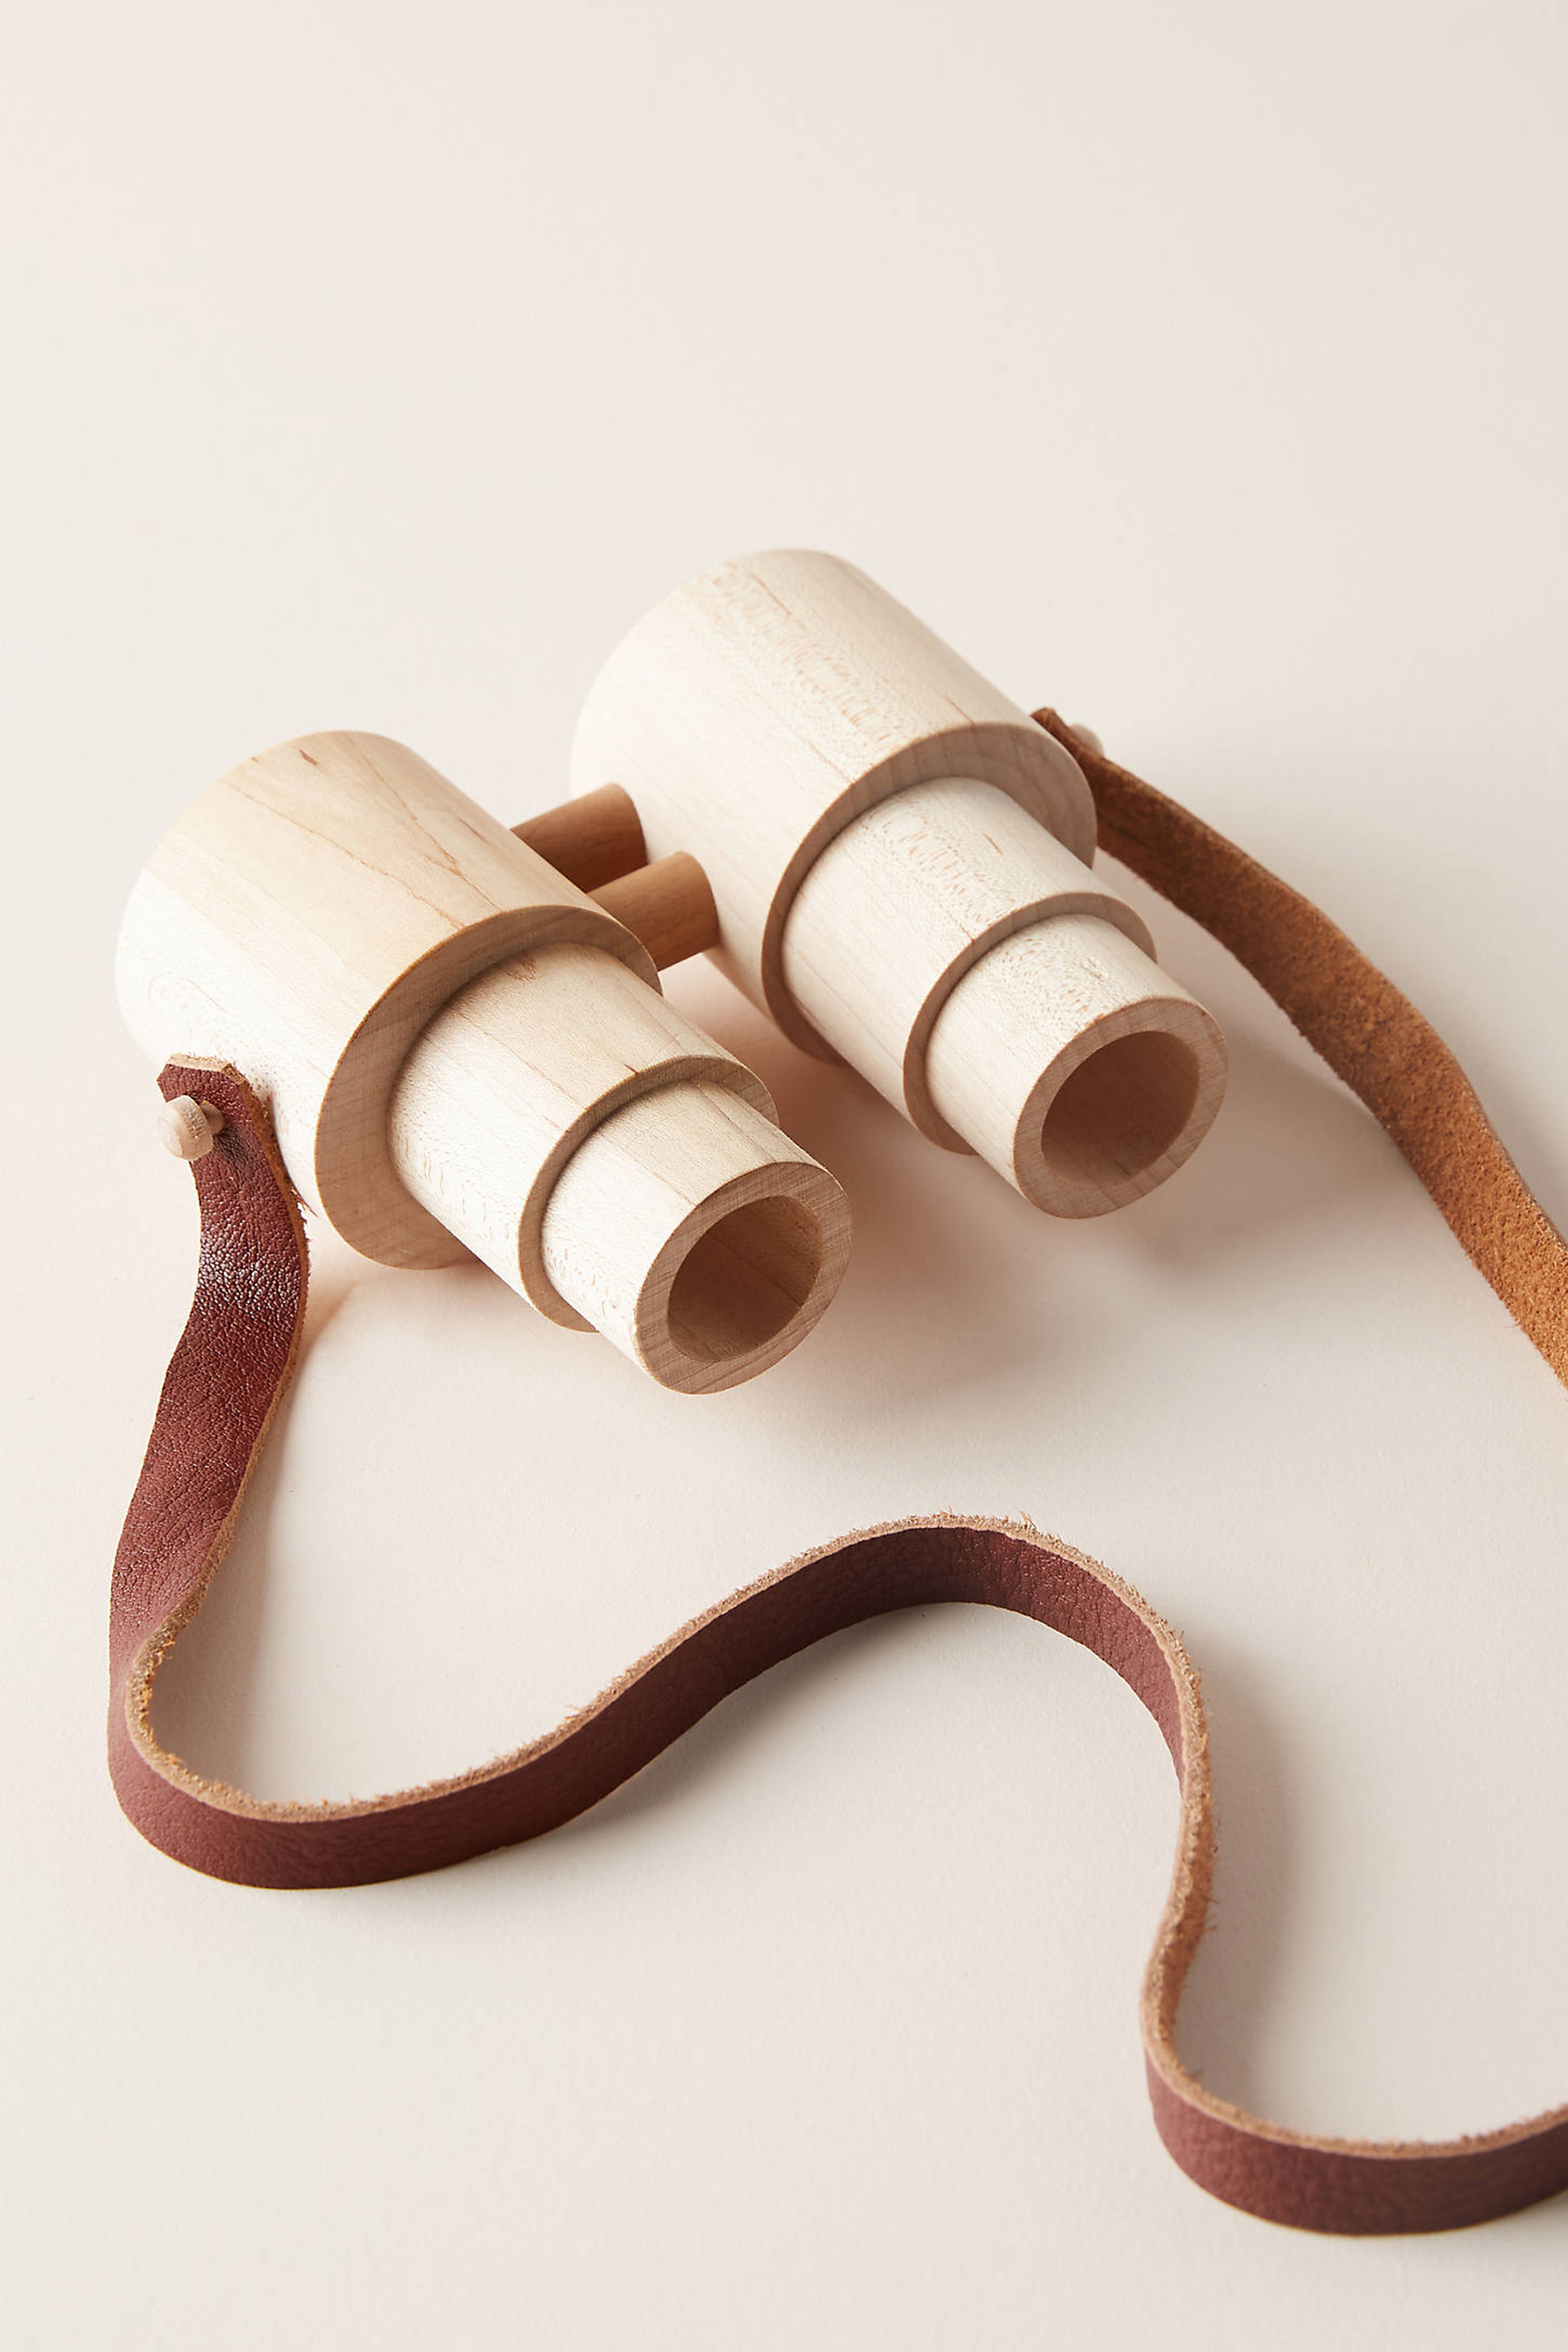 Wooden Binoculars Toy - Anthropologie